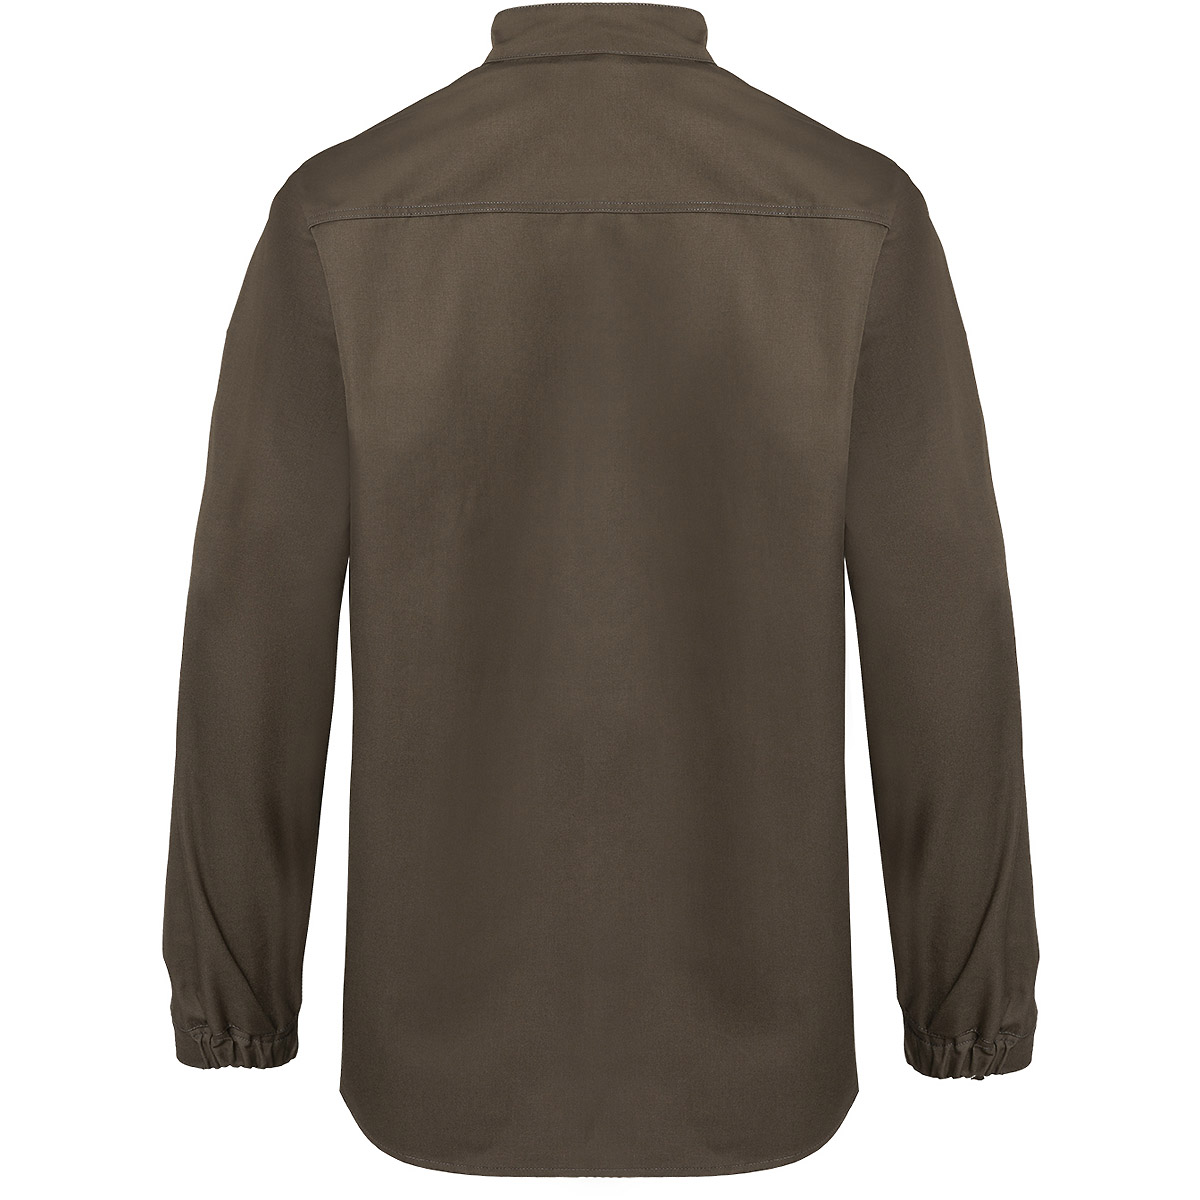 3 & Hemd Pullover | BIOGUARD Shirts T-Shirts PSA tuulzone | | Arbeitskleidung | KÜBLER Arbeitsschutz |